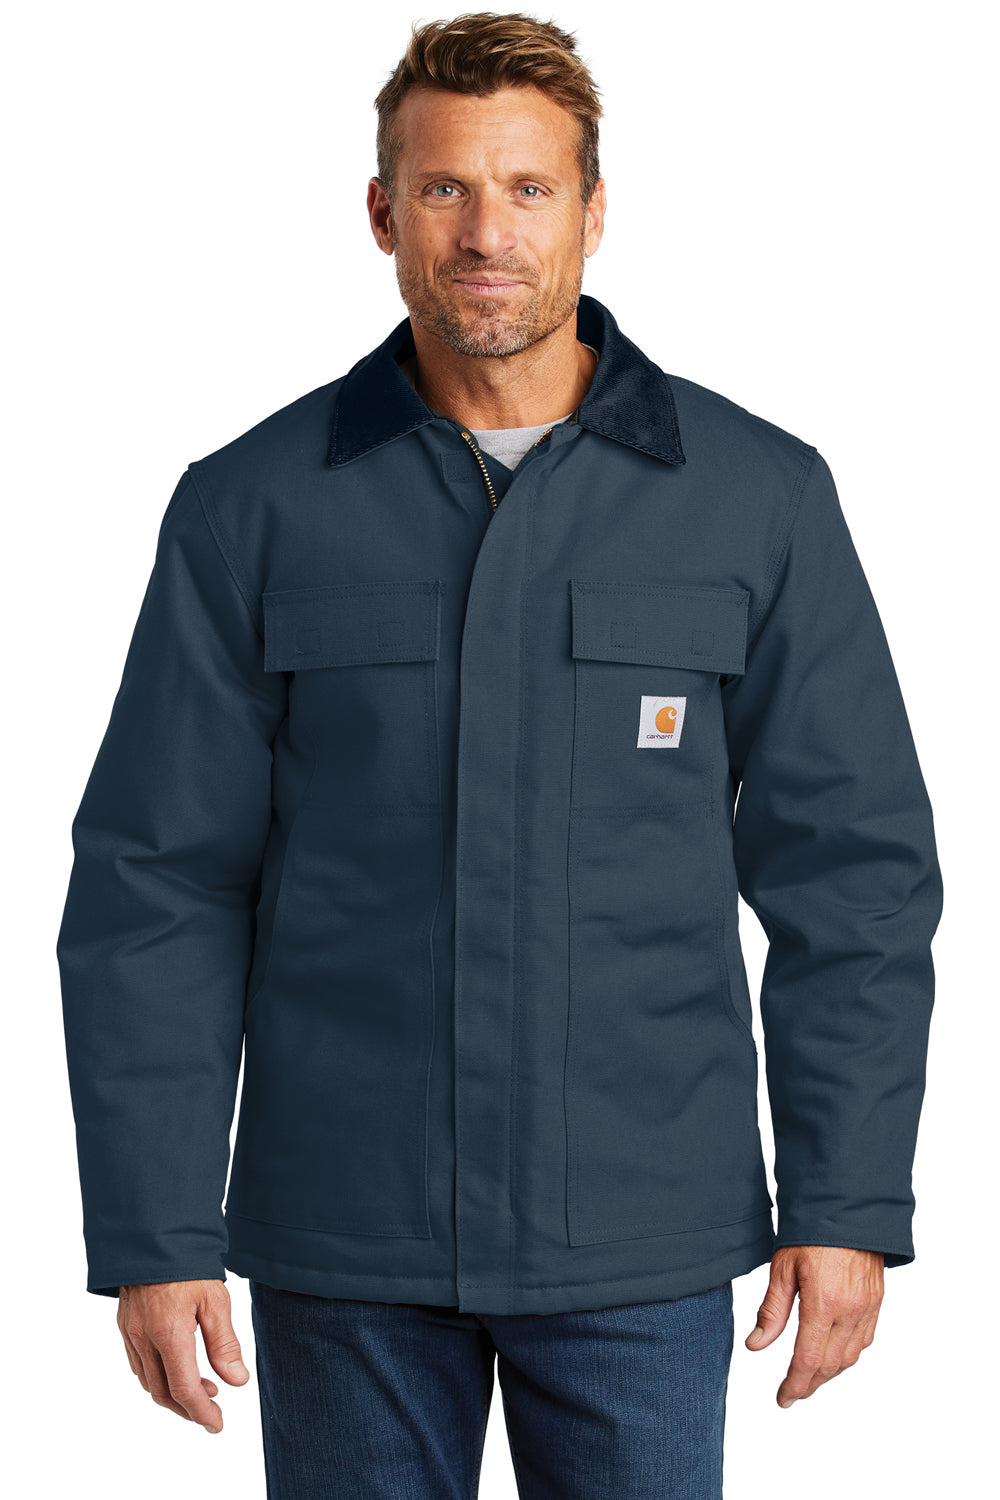 Carhartt CTC003/CTTC003 Mens Wind & Water Resistant Duck Cloth Full Zip Jacket Navy Blue Model Front